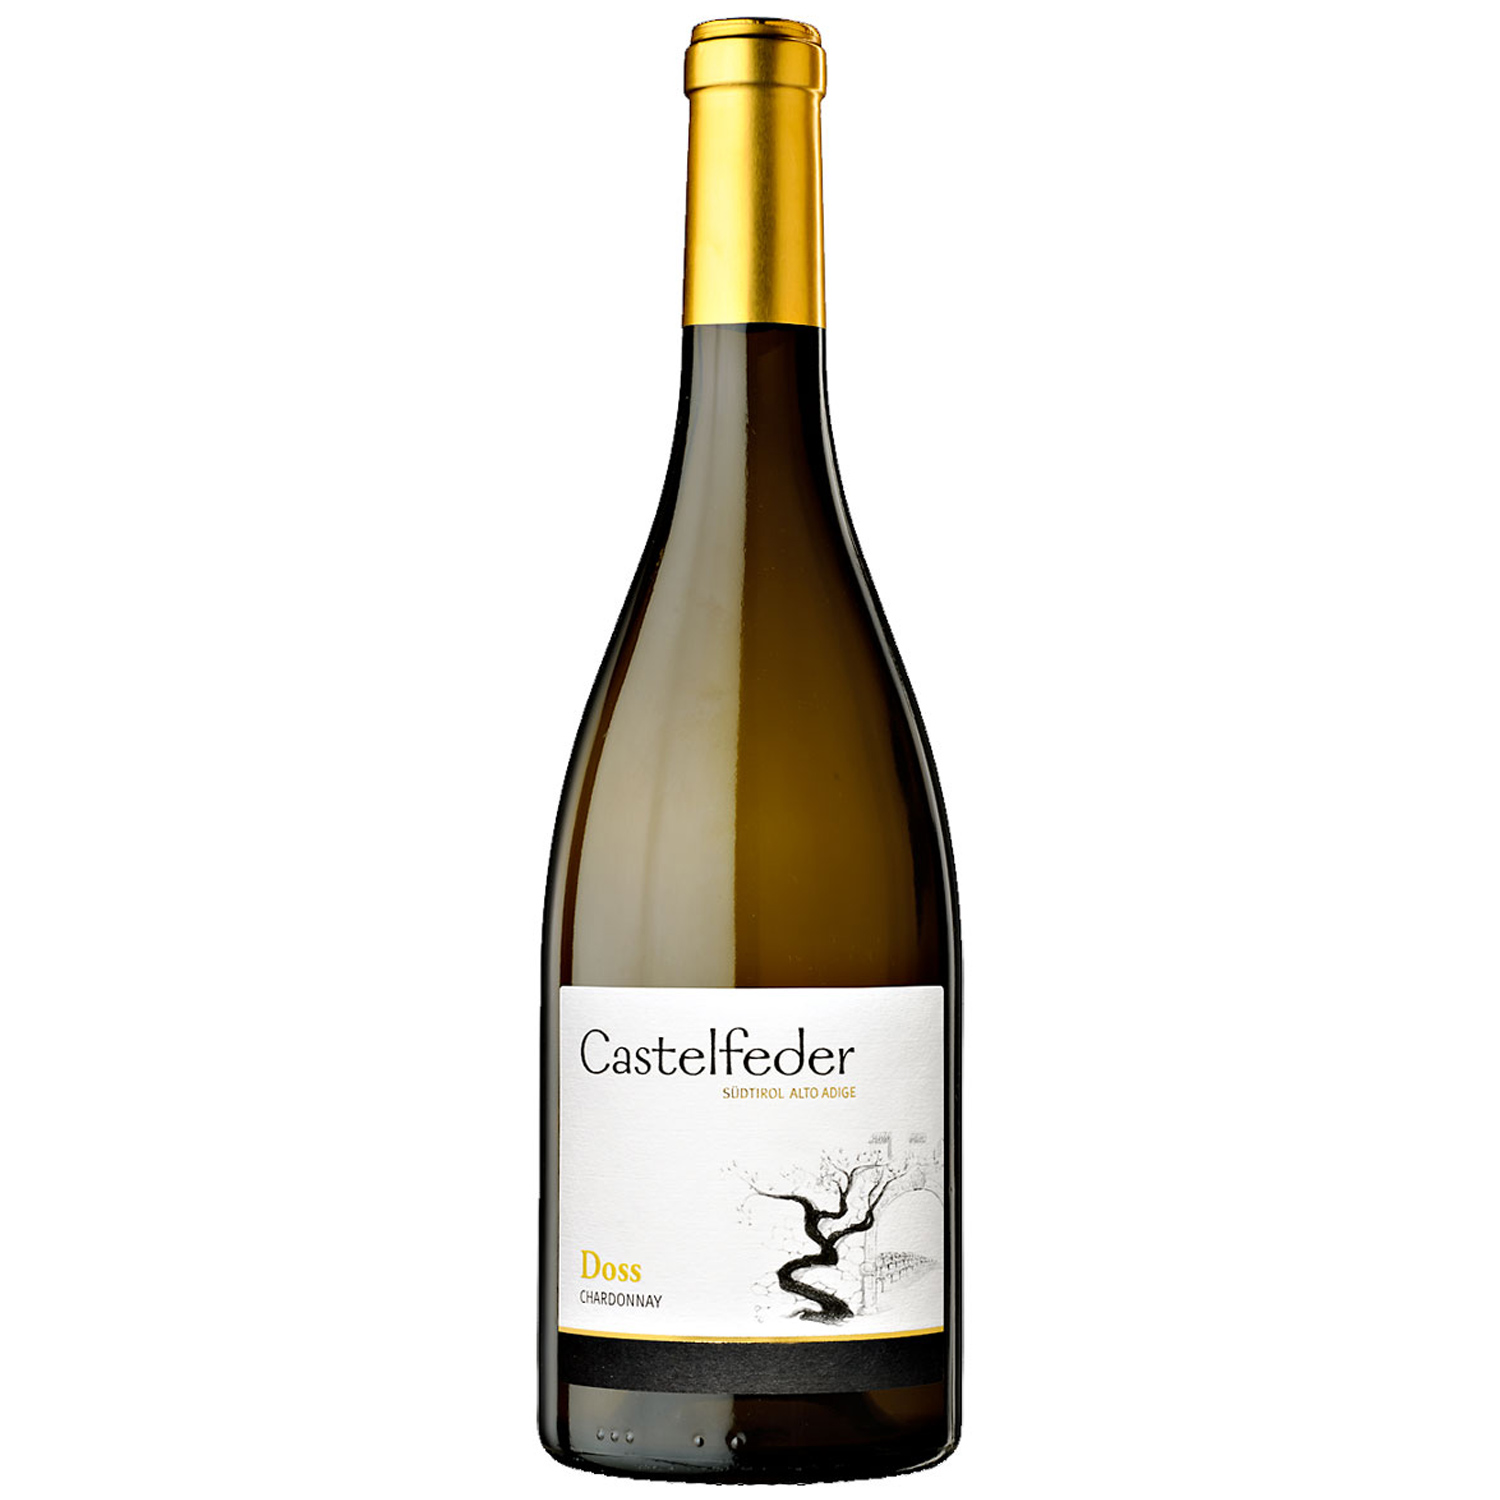 Castelfeder Doss Chardonnay 2019